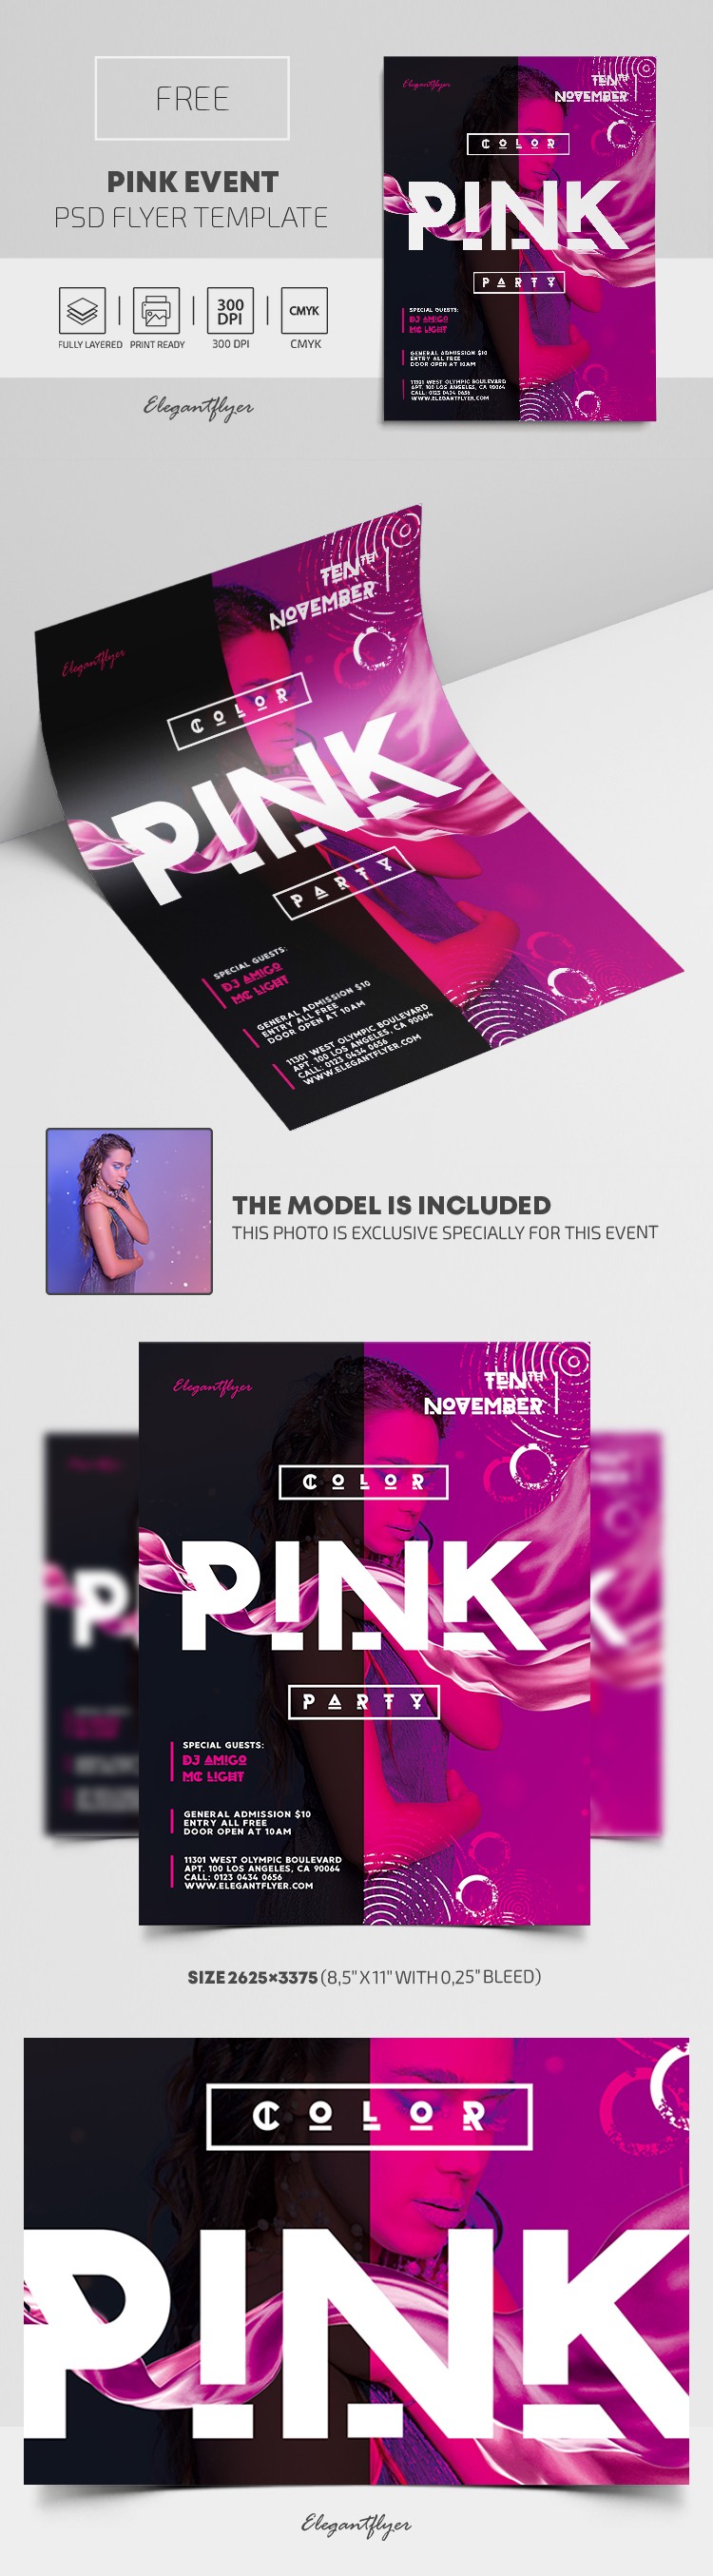 Pink Event by ElegantFlyer